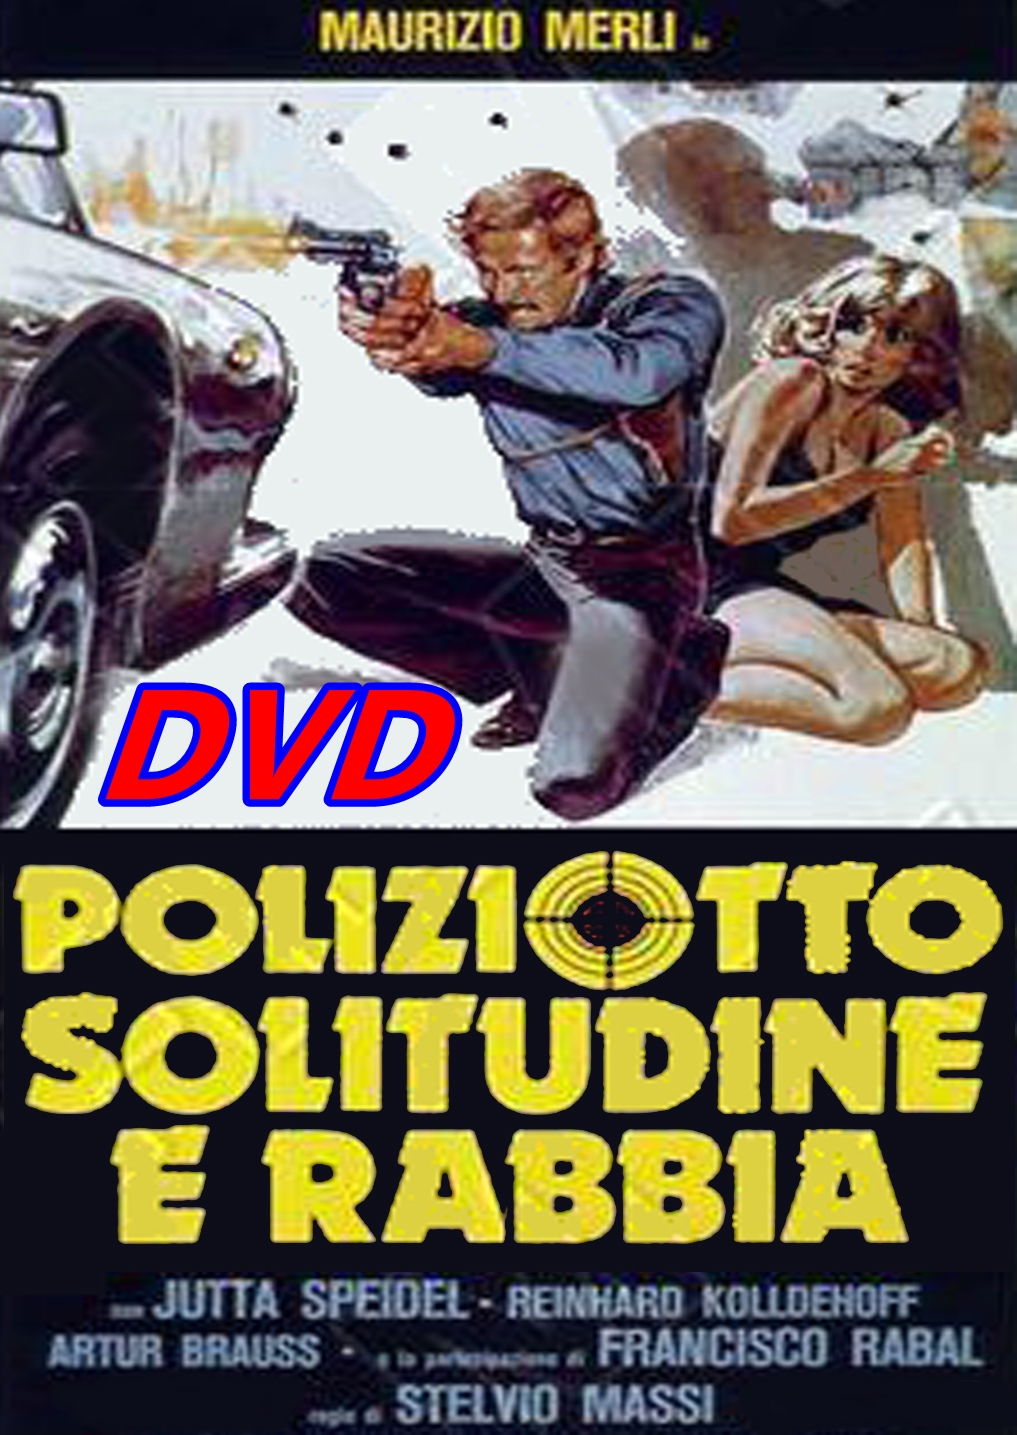 POLIZIOTTO_SOLITUDINE_E_RABBIA_-_DVD_1980_Maurizio_Merli